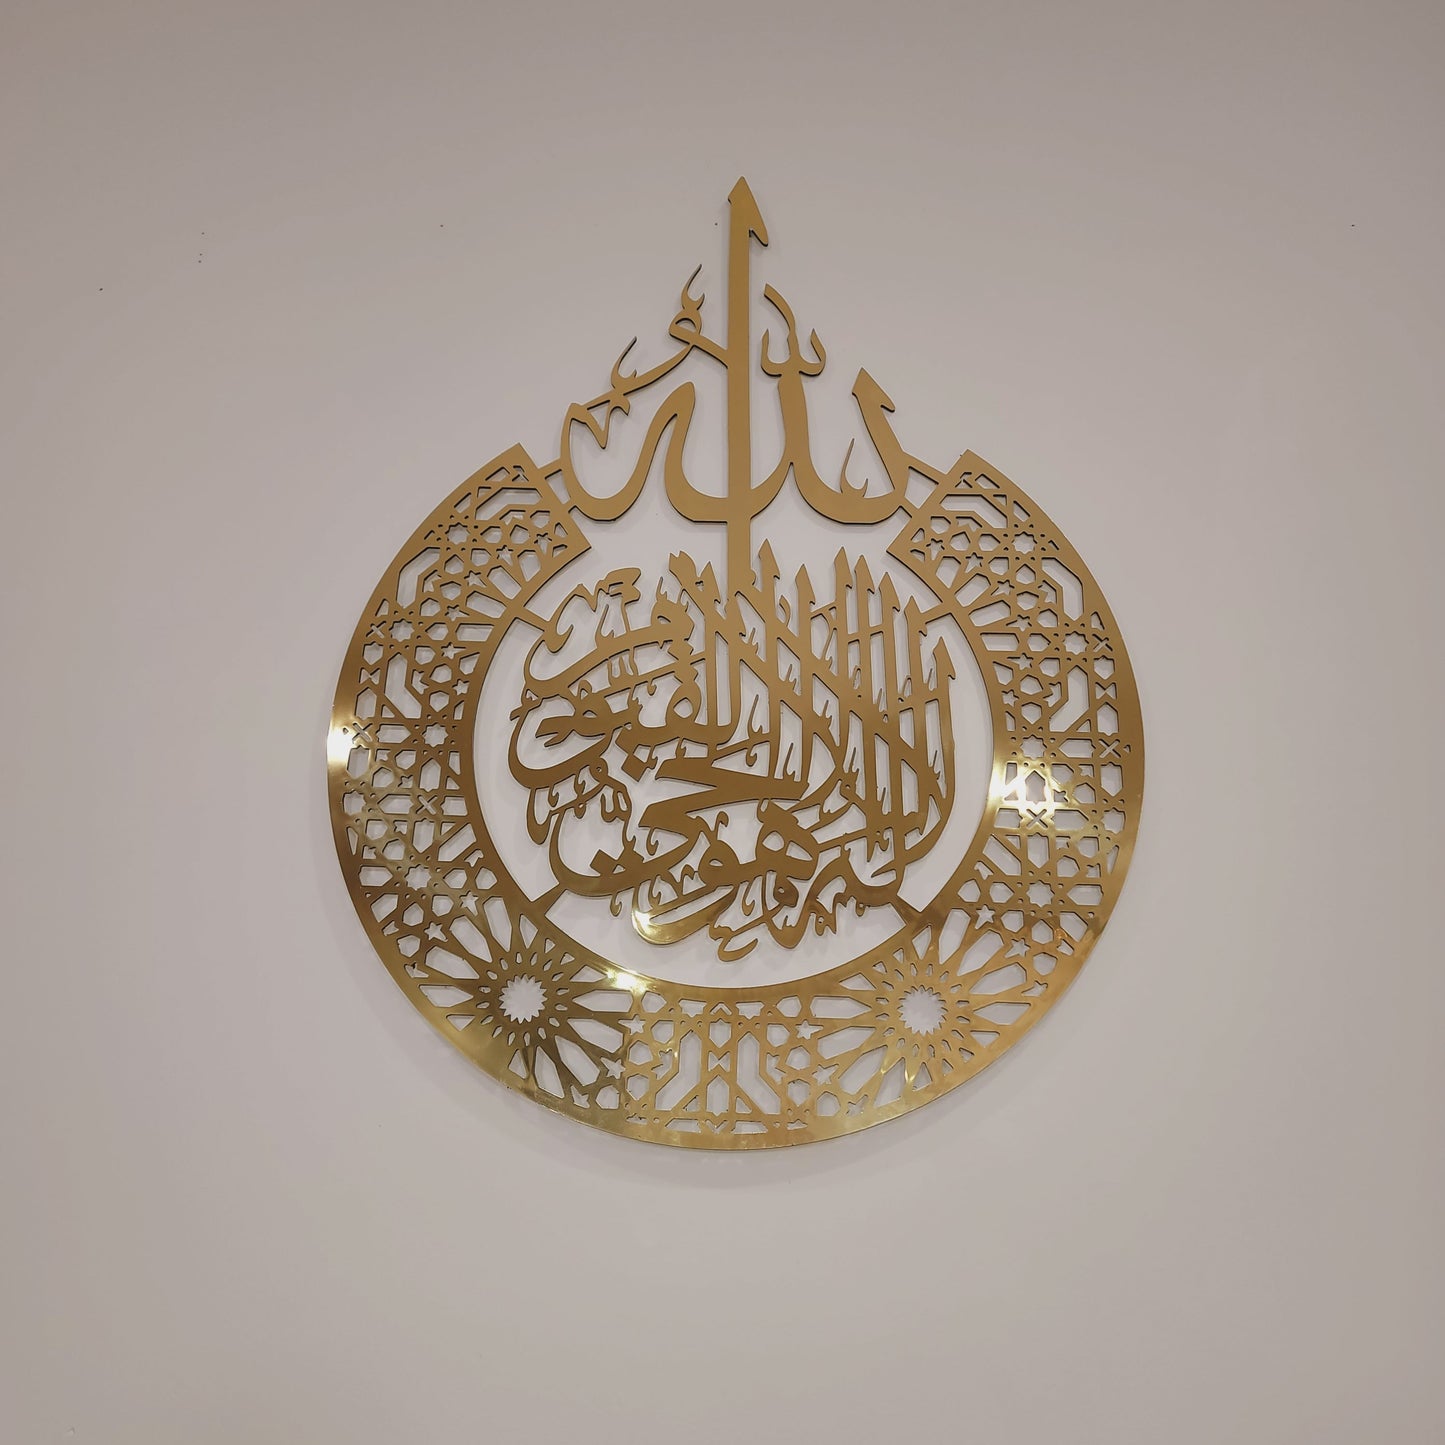 Q-003 / Ayat Al-kursi with Arabsque / Metal Alucobond / Islamic Home Decor / Mirror/ Arabic Calligraphy / Islamic Gifts / wall art